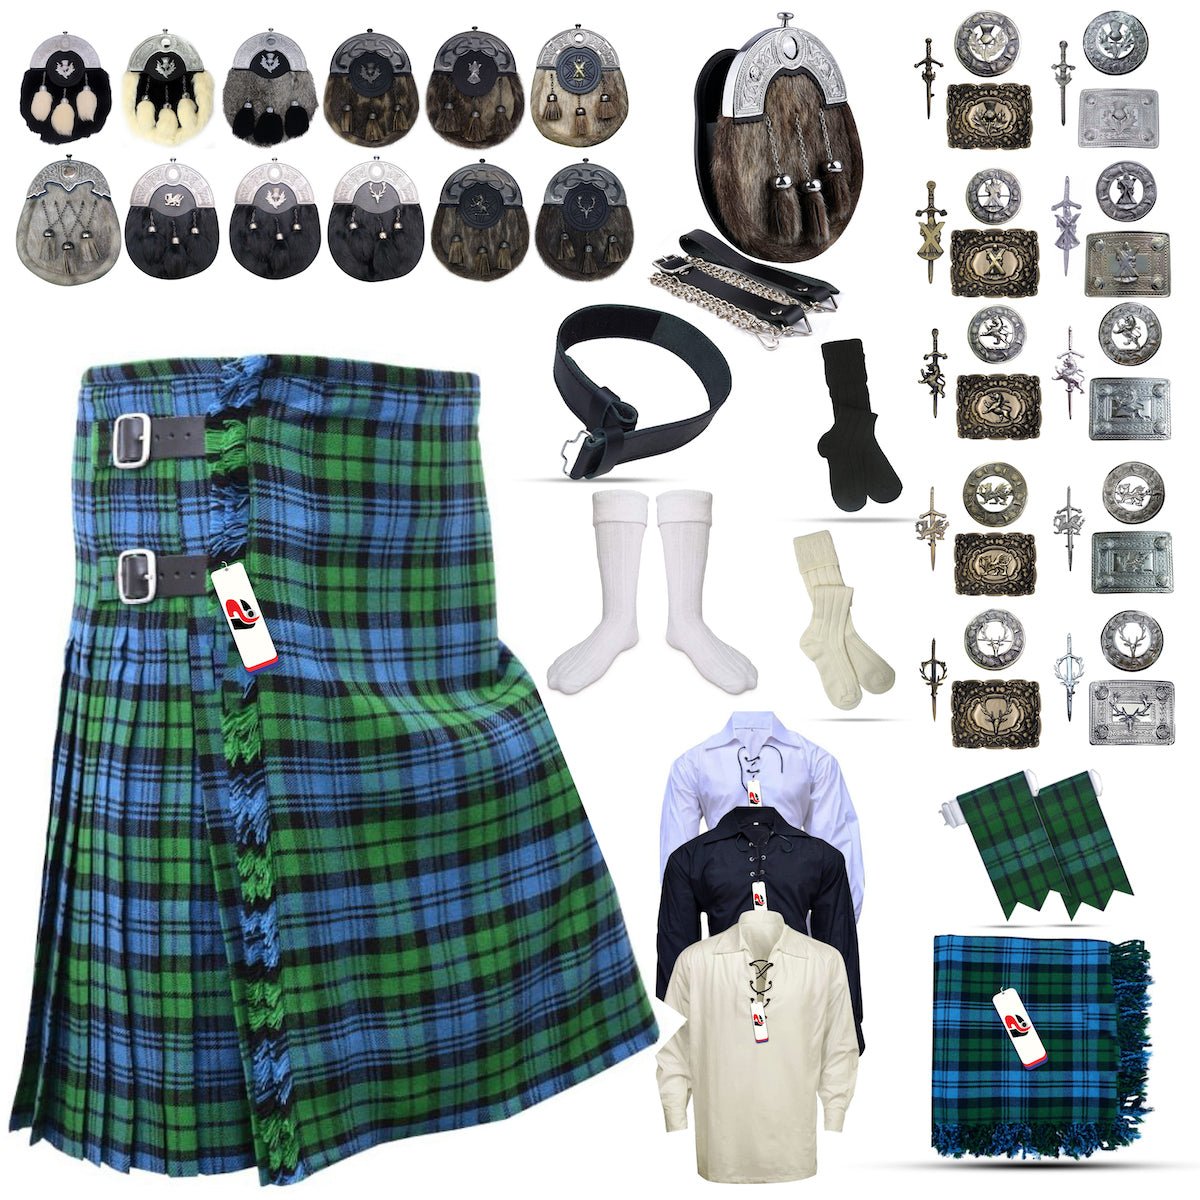 Ancient Campbell Tartan Highland Kilt Outfit